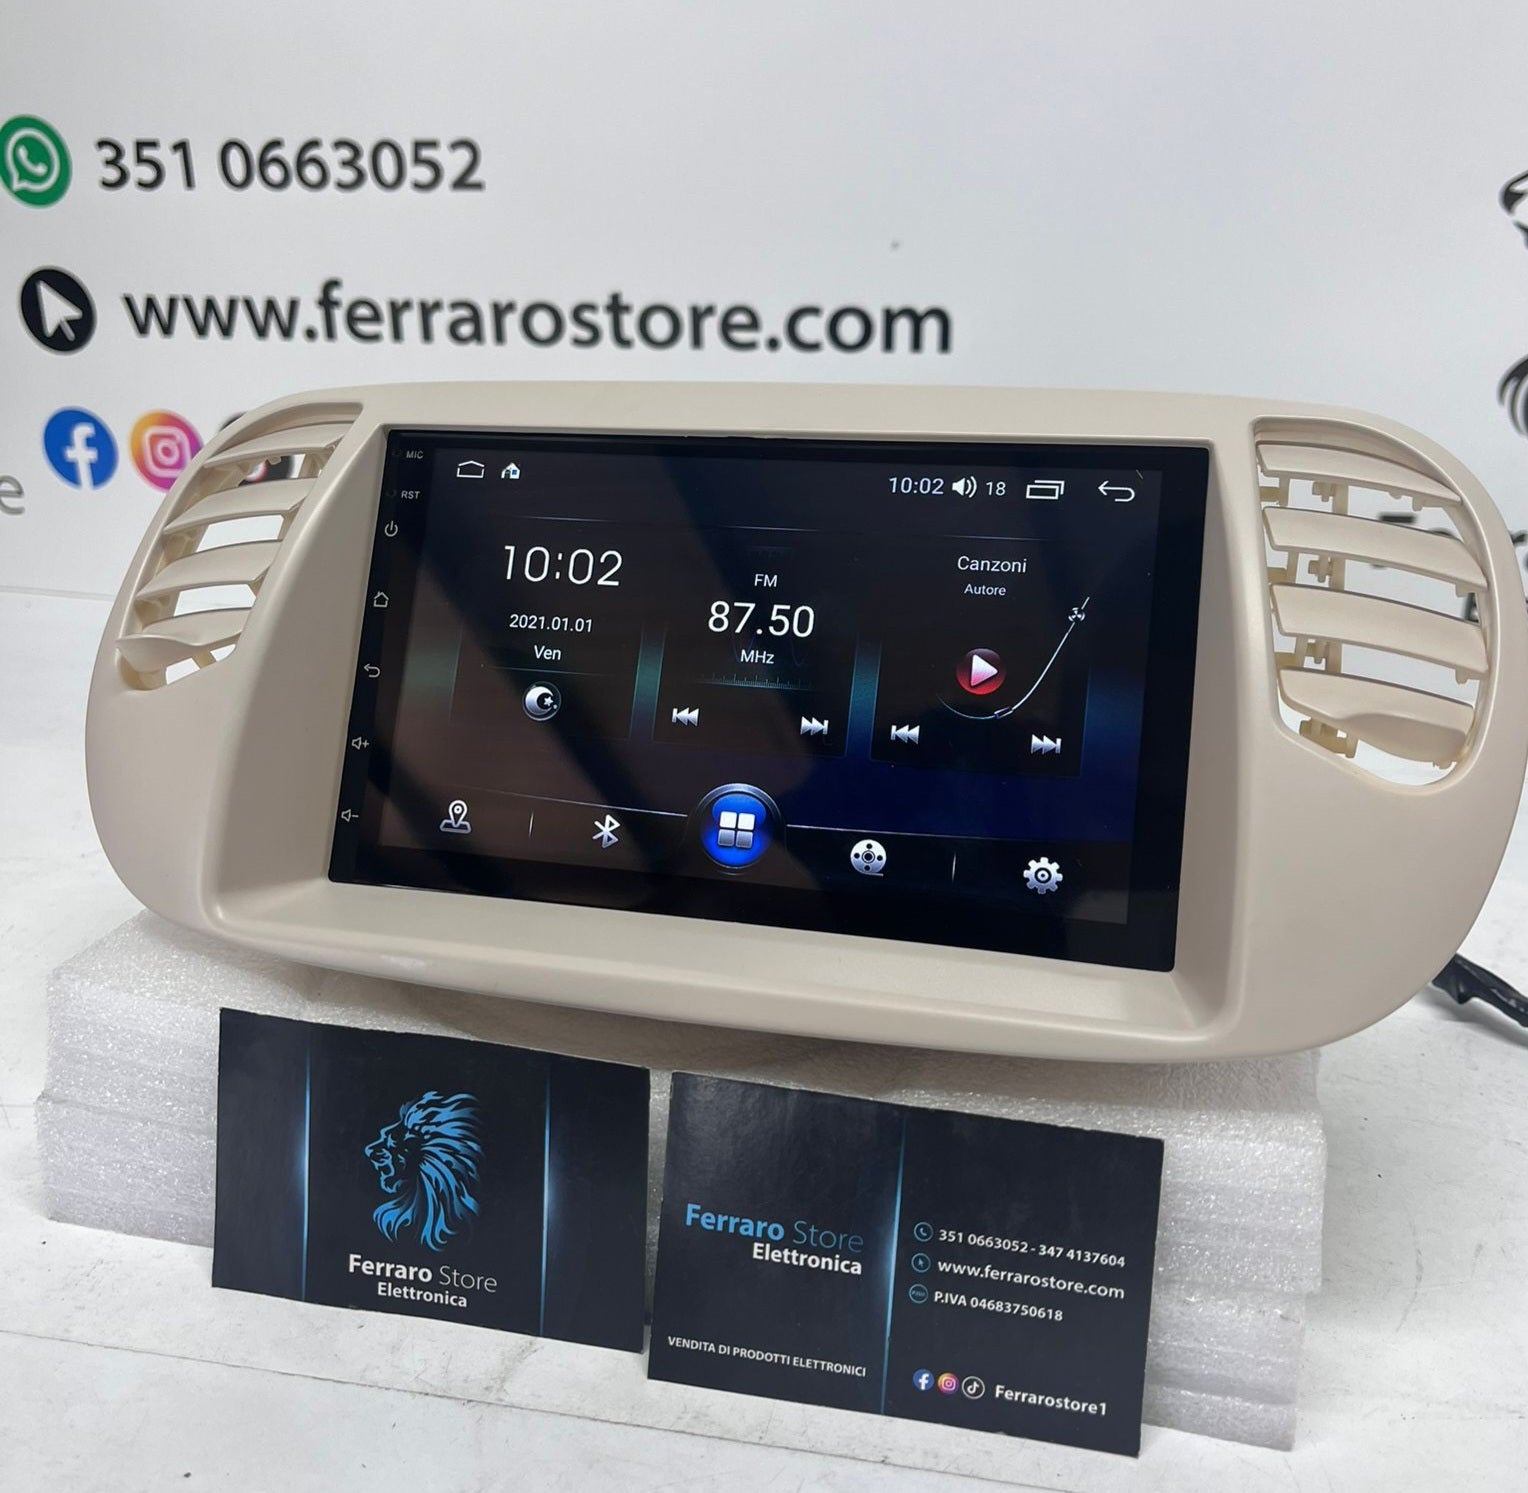 Autoradio per FIAT 500s [2007 - 2014] - Sistema auto Intelligente, 2Din 7"Pollici, GPS, Navigatore, Wifi.